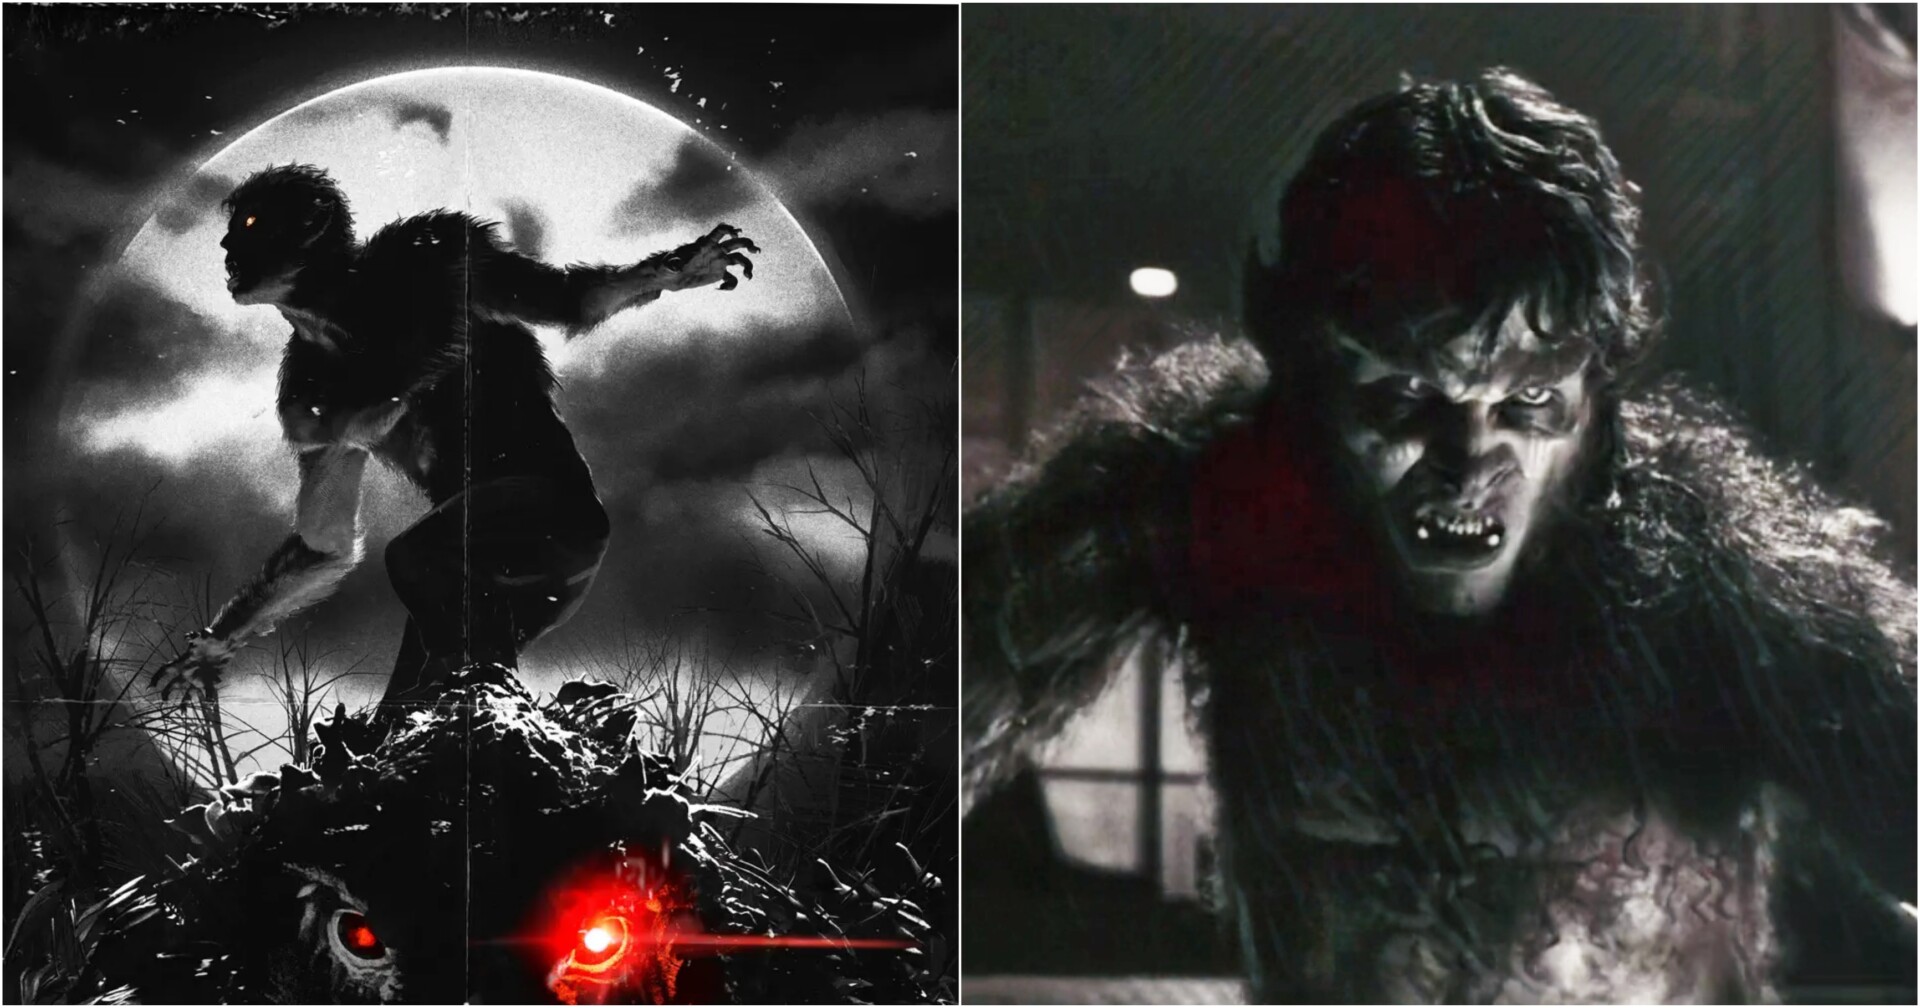 Beast Mode: Night of the Werewolf - Metacritic